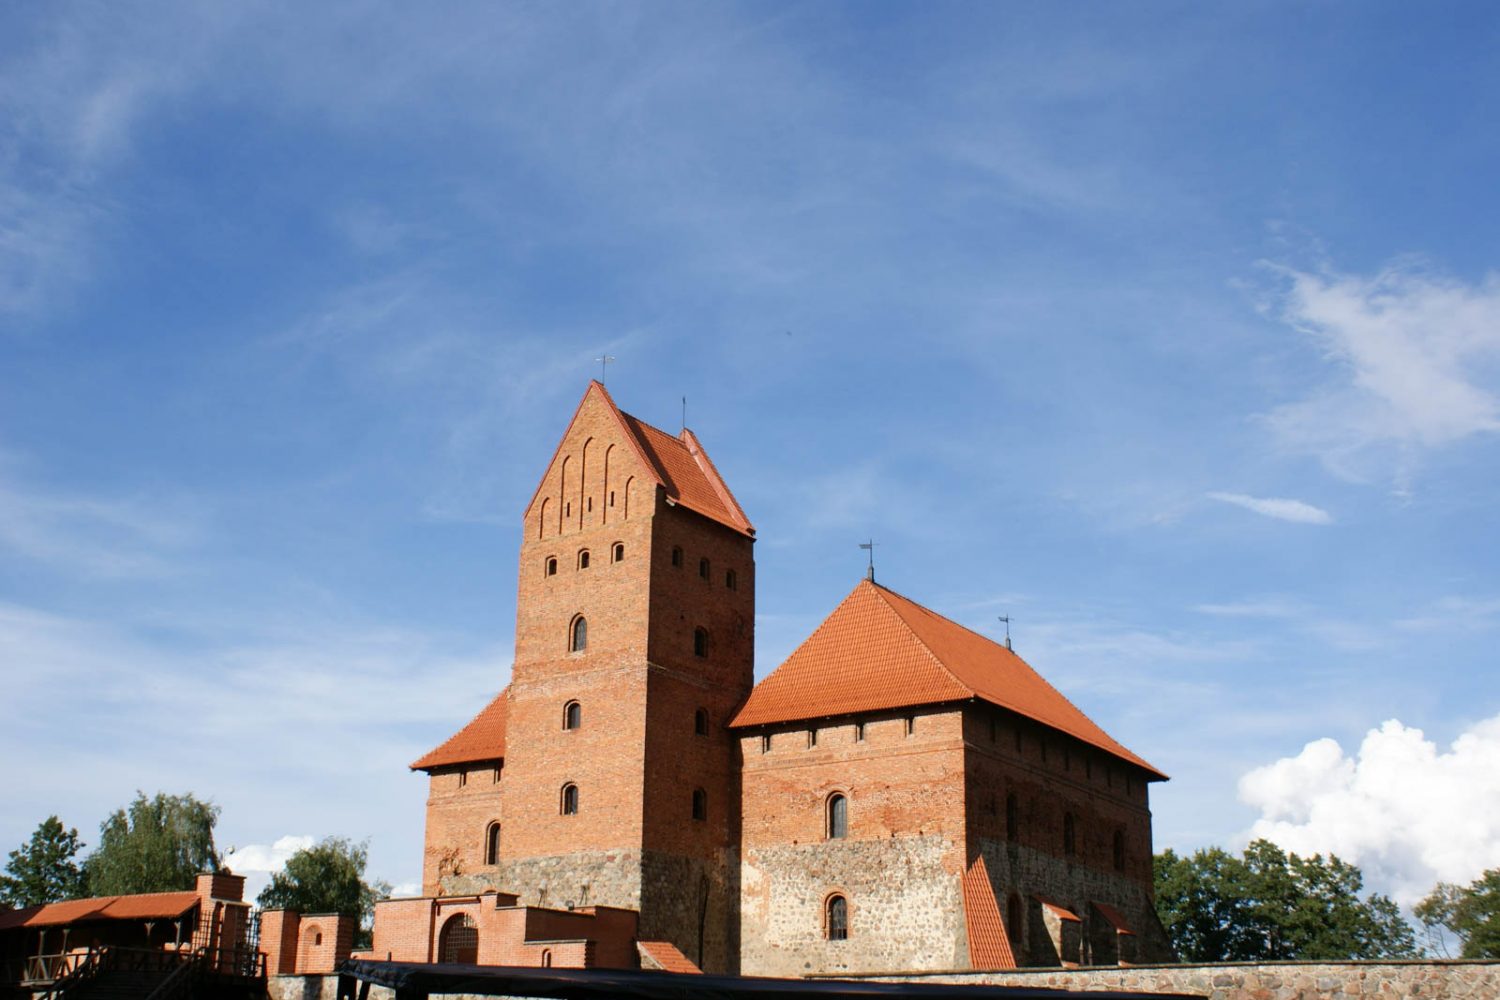 tour around Vilnius city and Trakai Castle